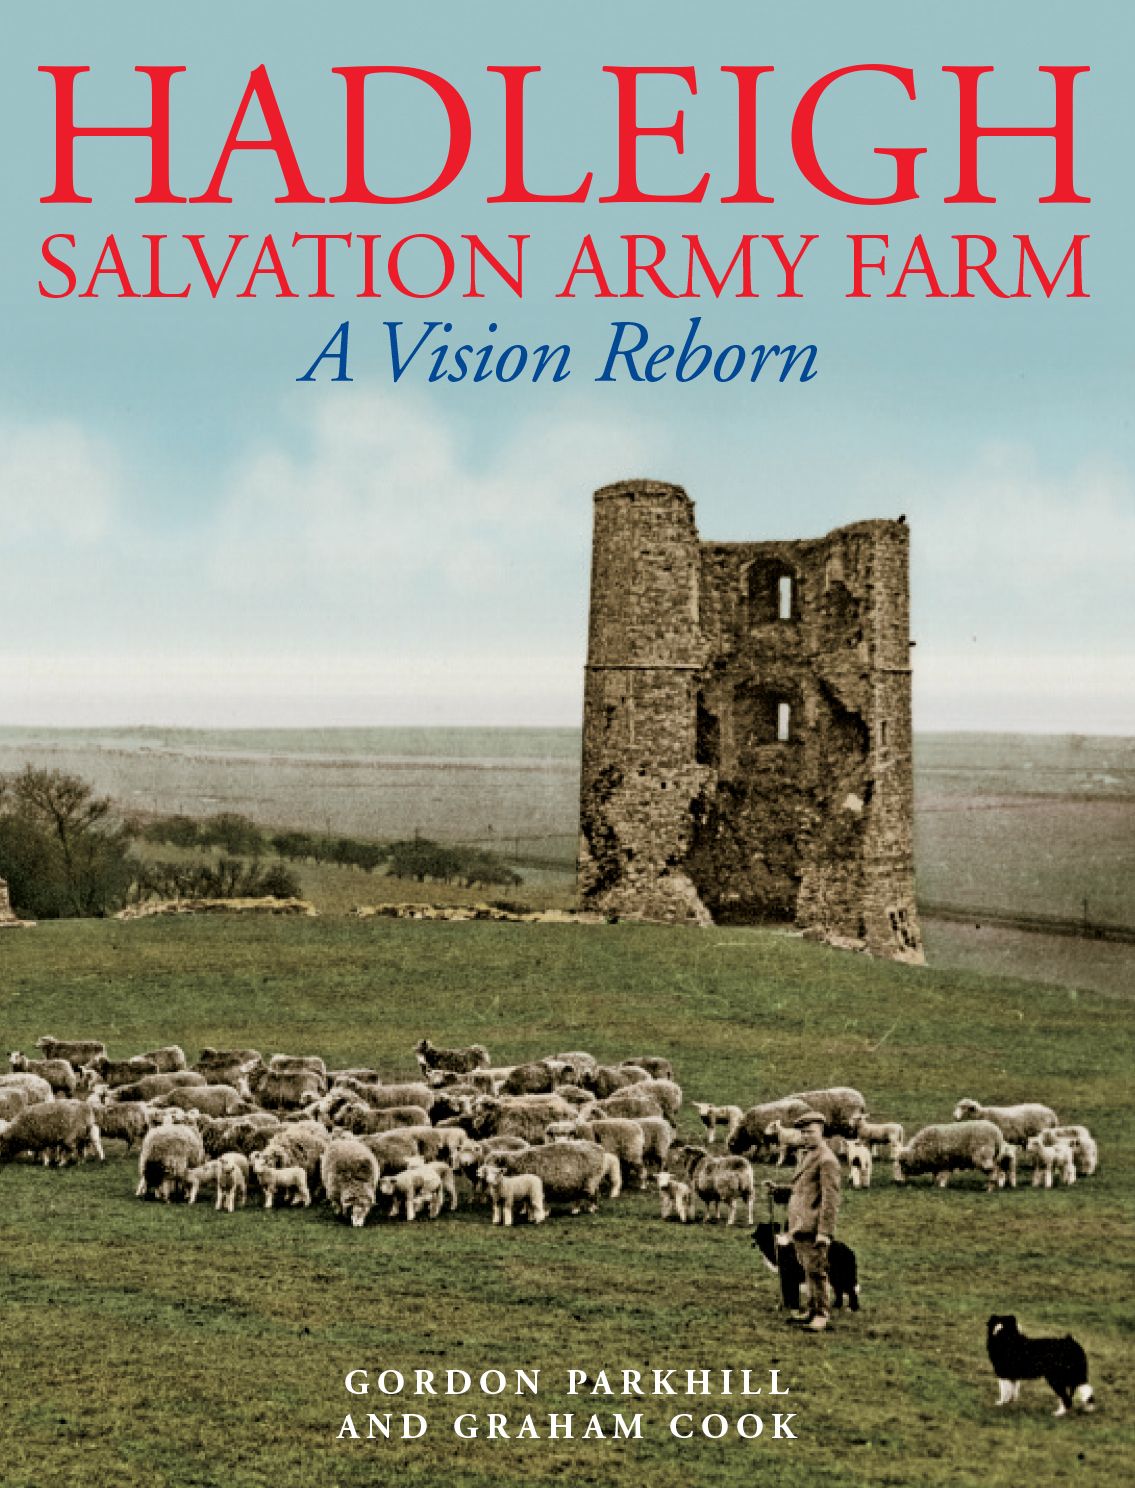 Hadleigh Salvation Army Farm: A Vision Reborn (Revised Edition)